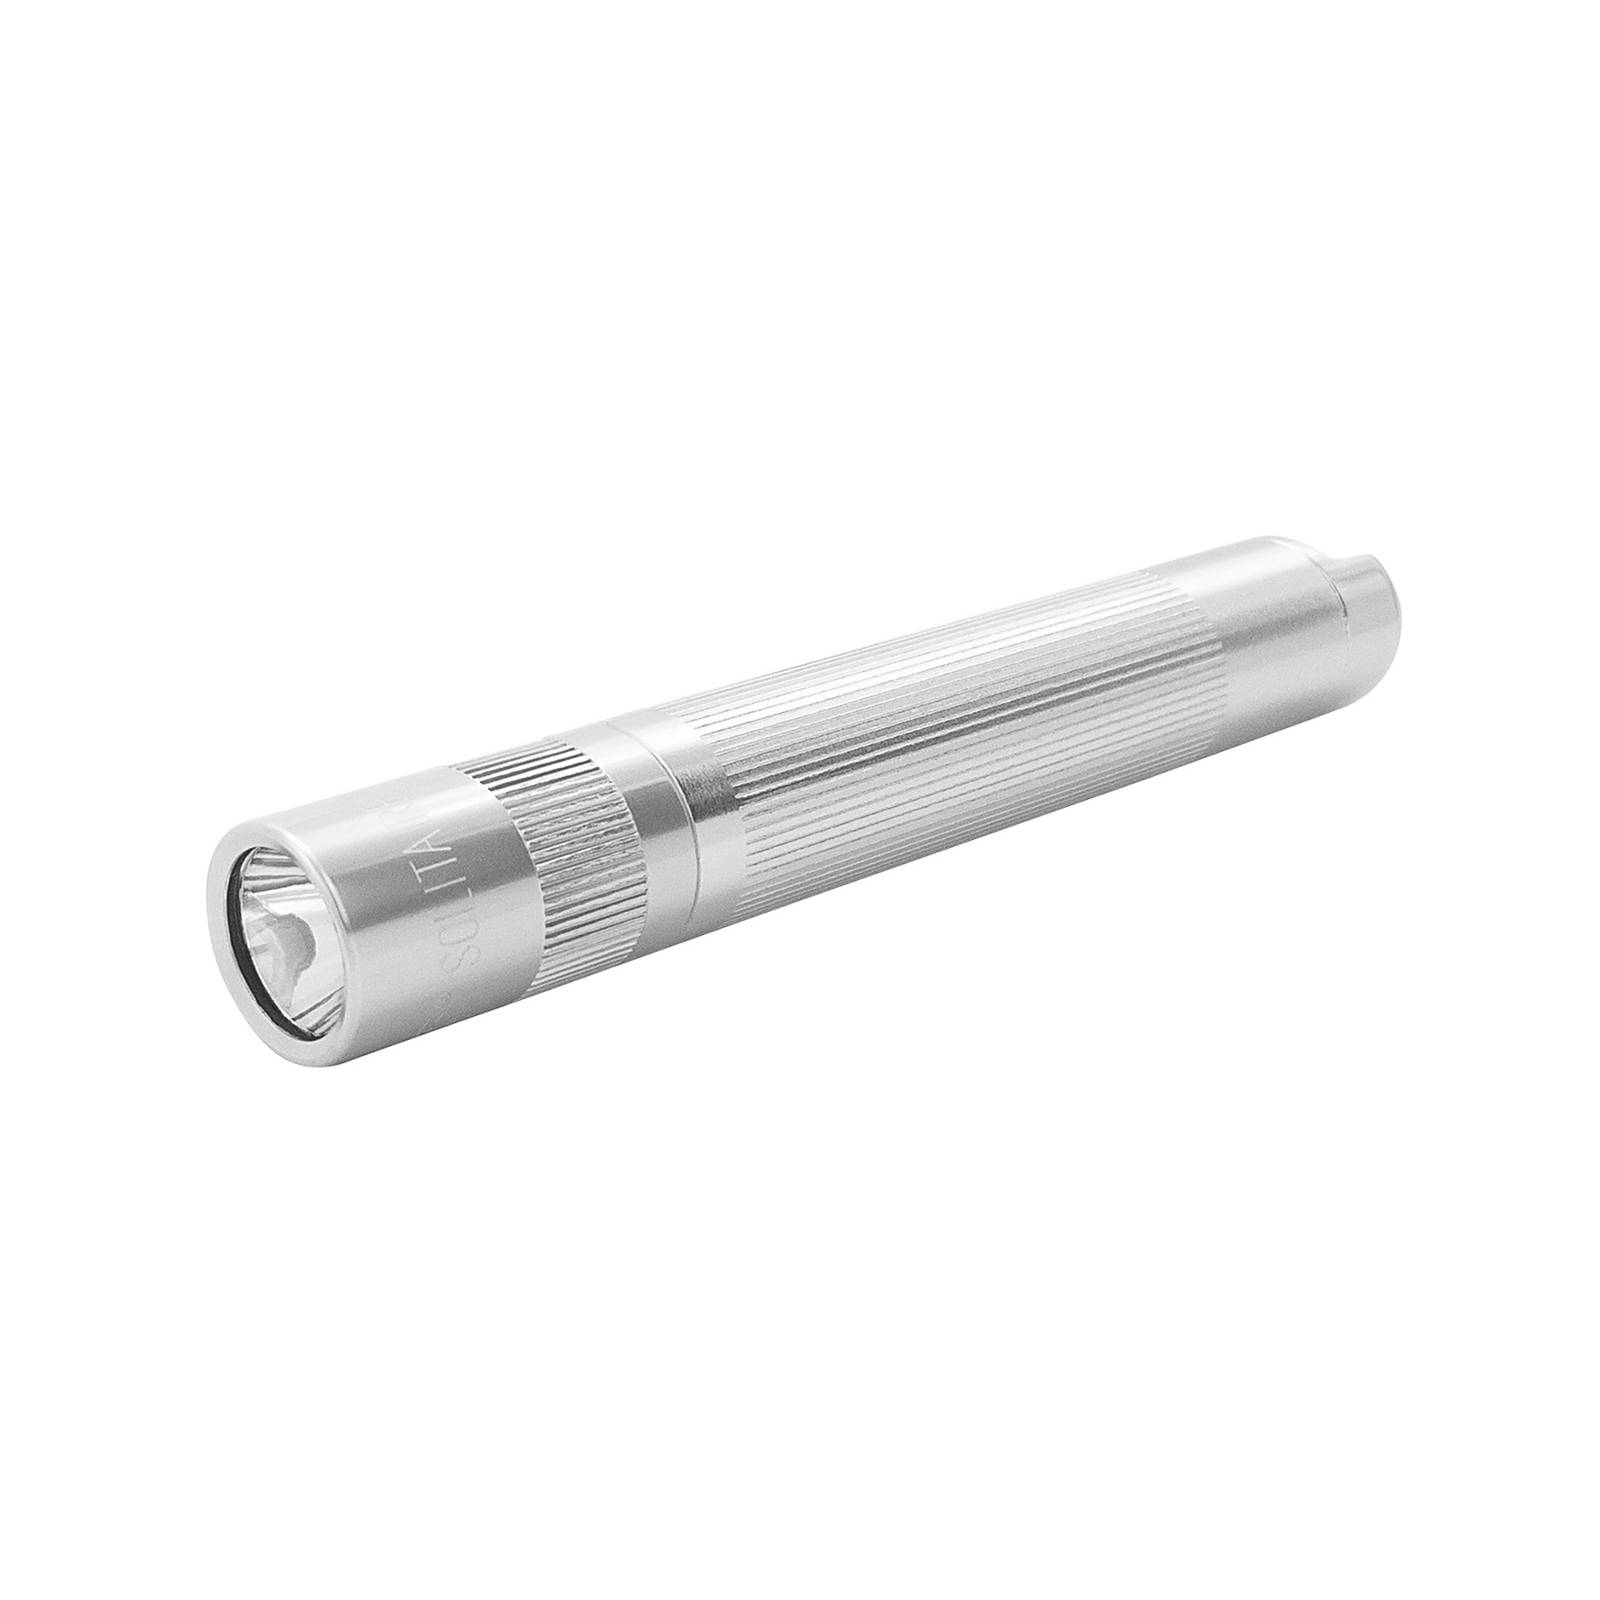 Maglite LED baterka Solitaire, 1 článok AAA, strieborná